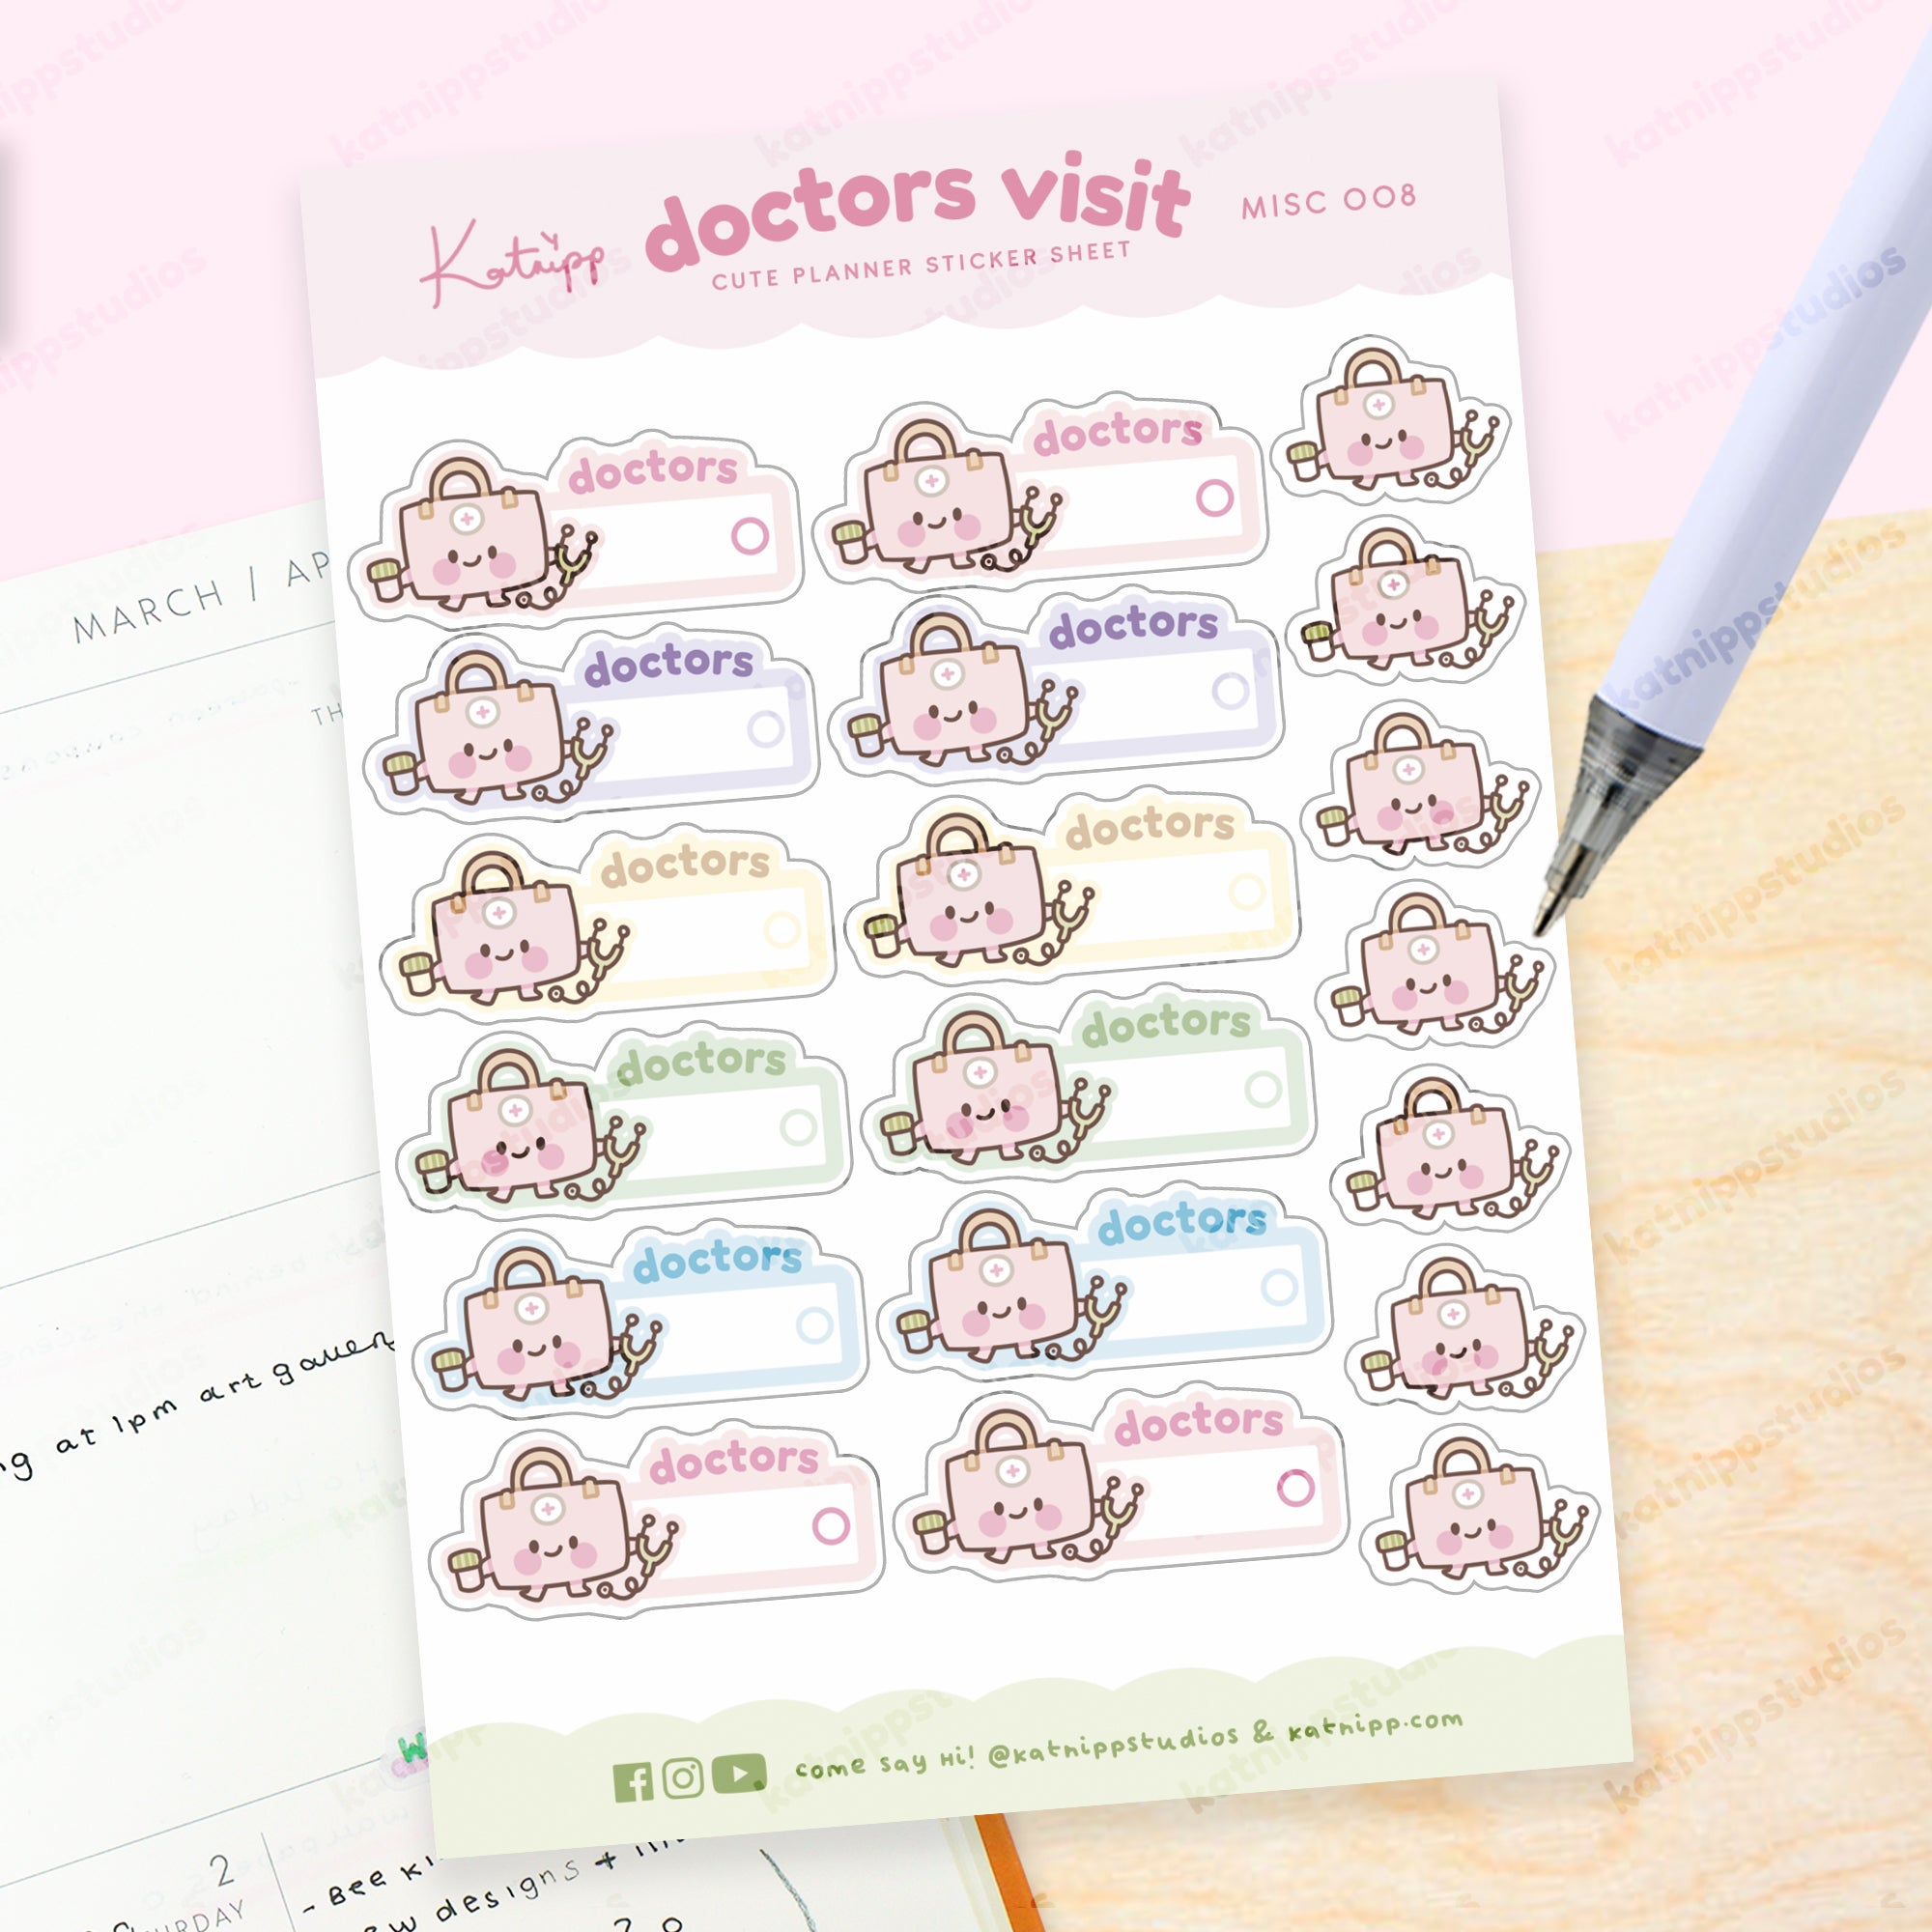 Doctors Visit Planner Sticker Sheet - MISC 008